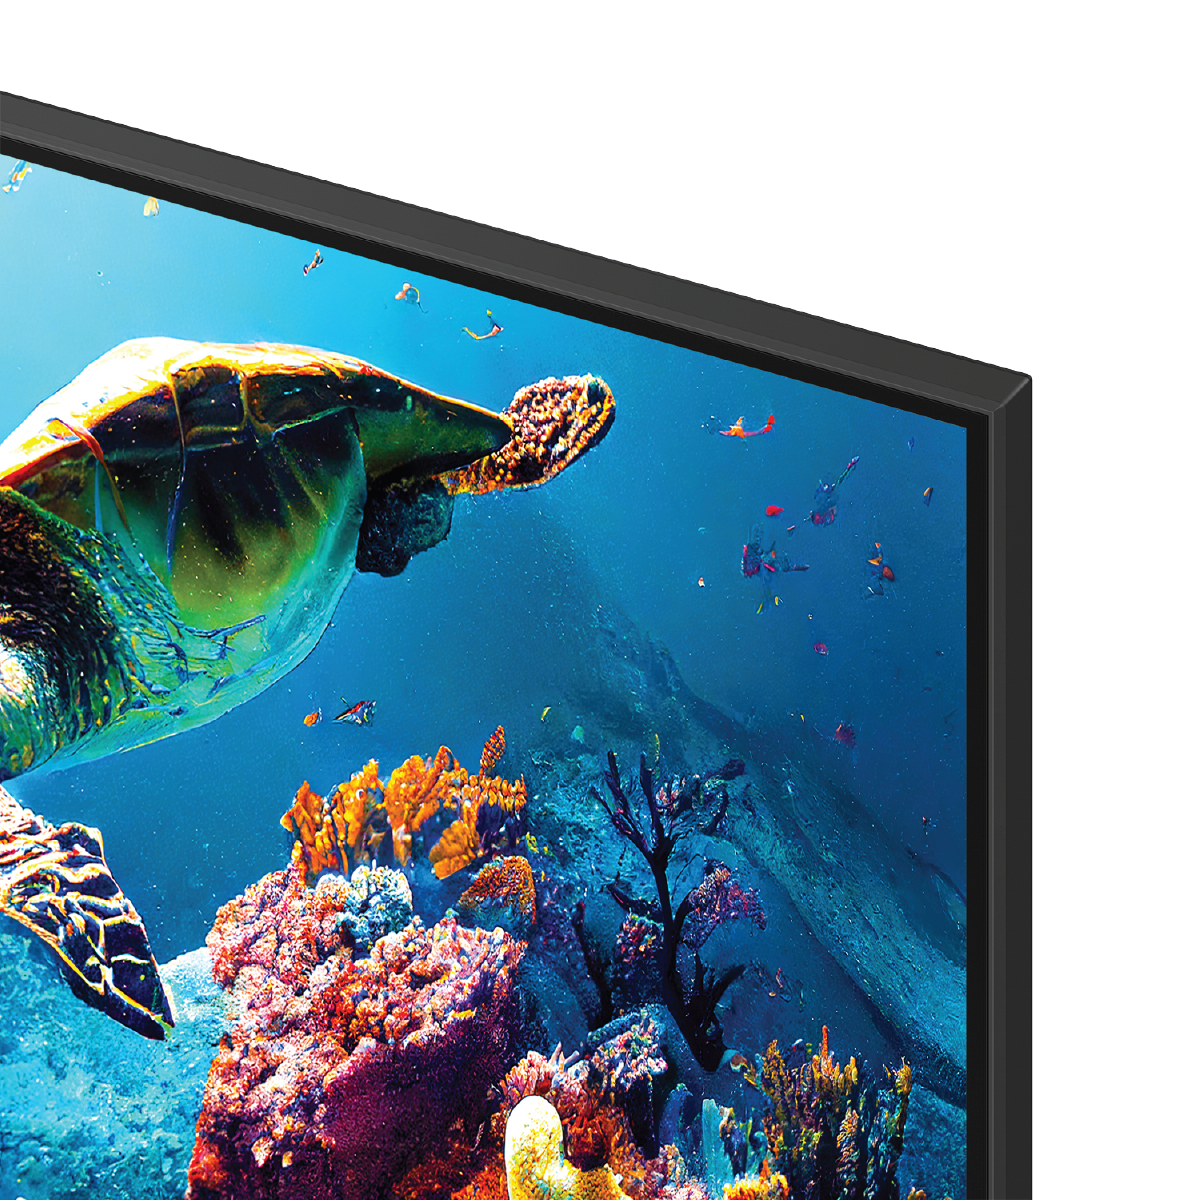 Samsung 55" Class Crystal UHD 4K Smart TV DU7200 (2024) - UN55DU7200FXZA